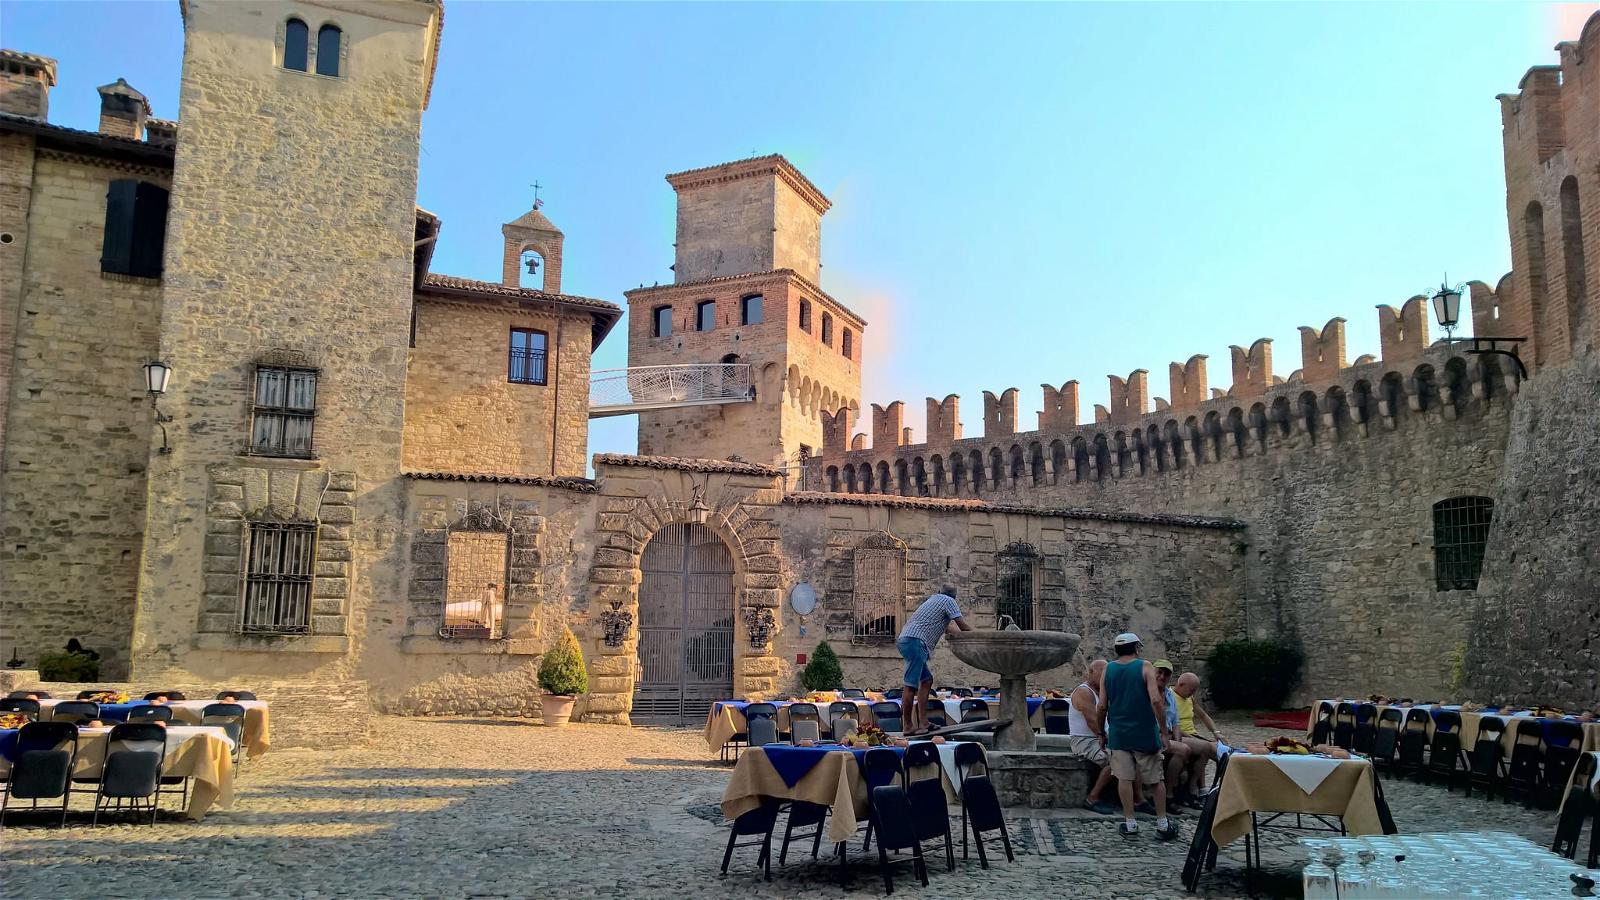 Castello di Vigoleno の画像. italy castle italian italia emilia castelli emiliaromagna romagna vigoleno arquato cstello castelloborgodivigoleno